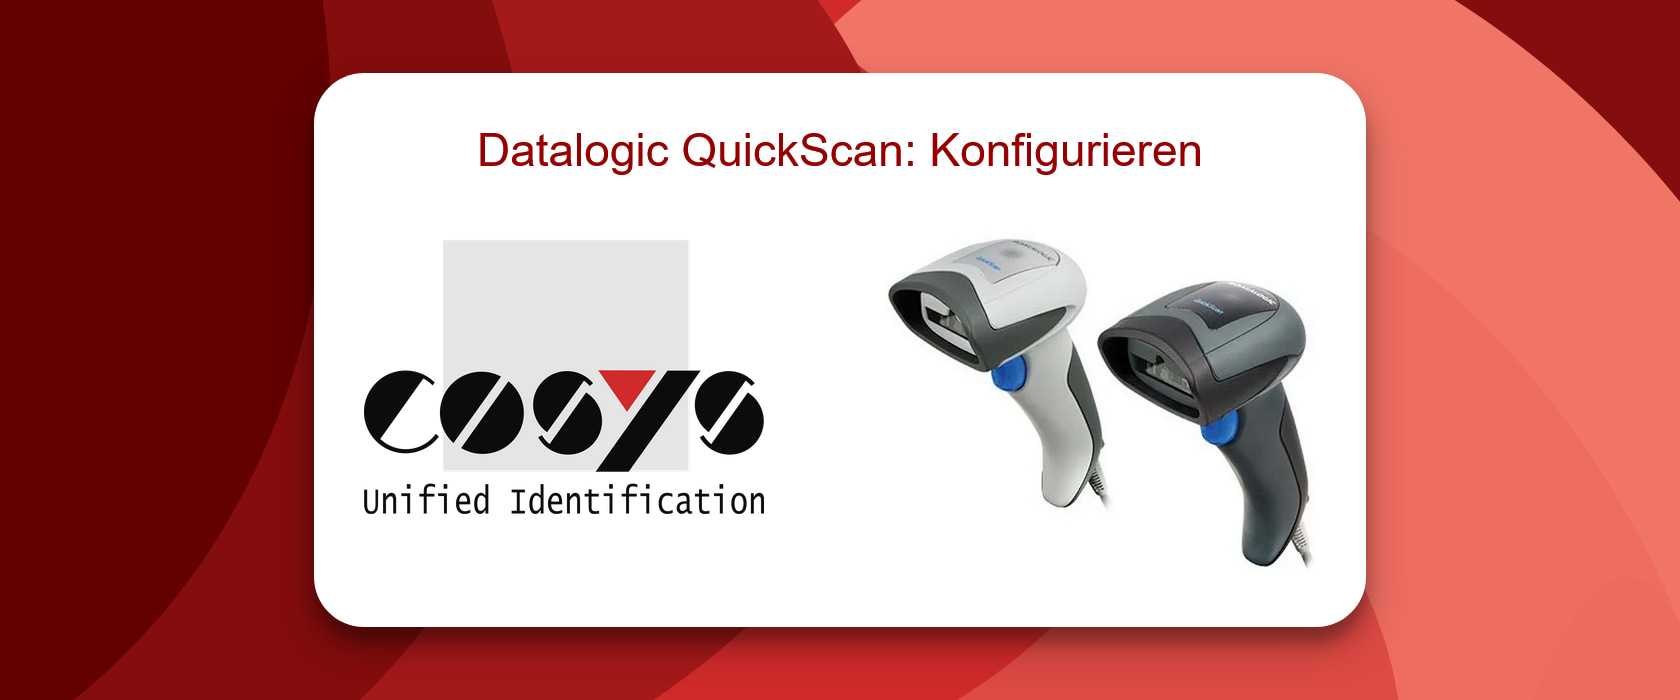 Konfiguration des Datalogic QuickScan Handscanners